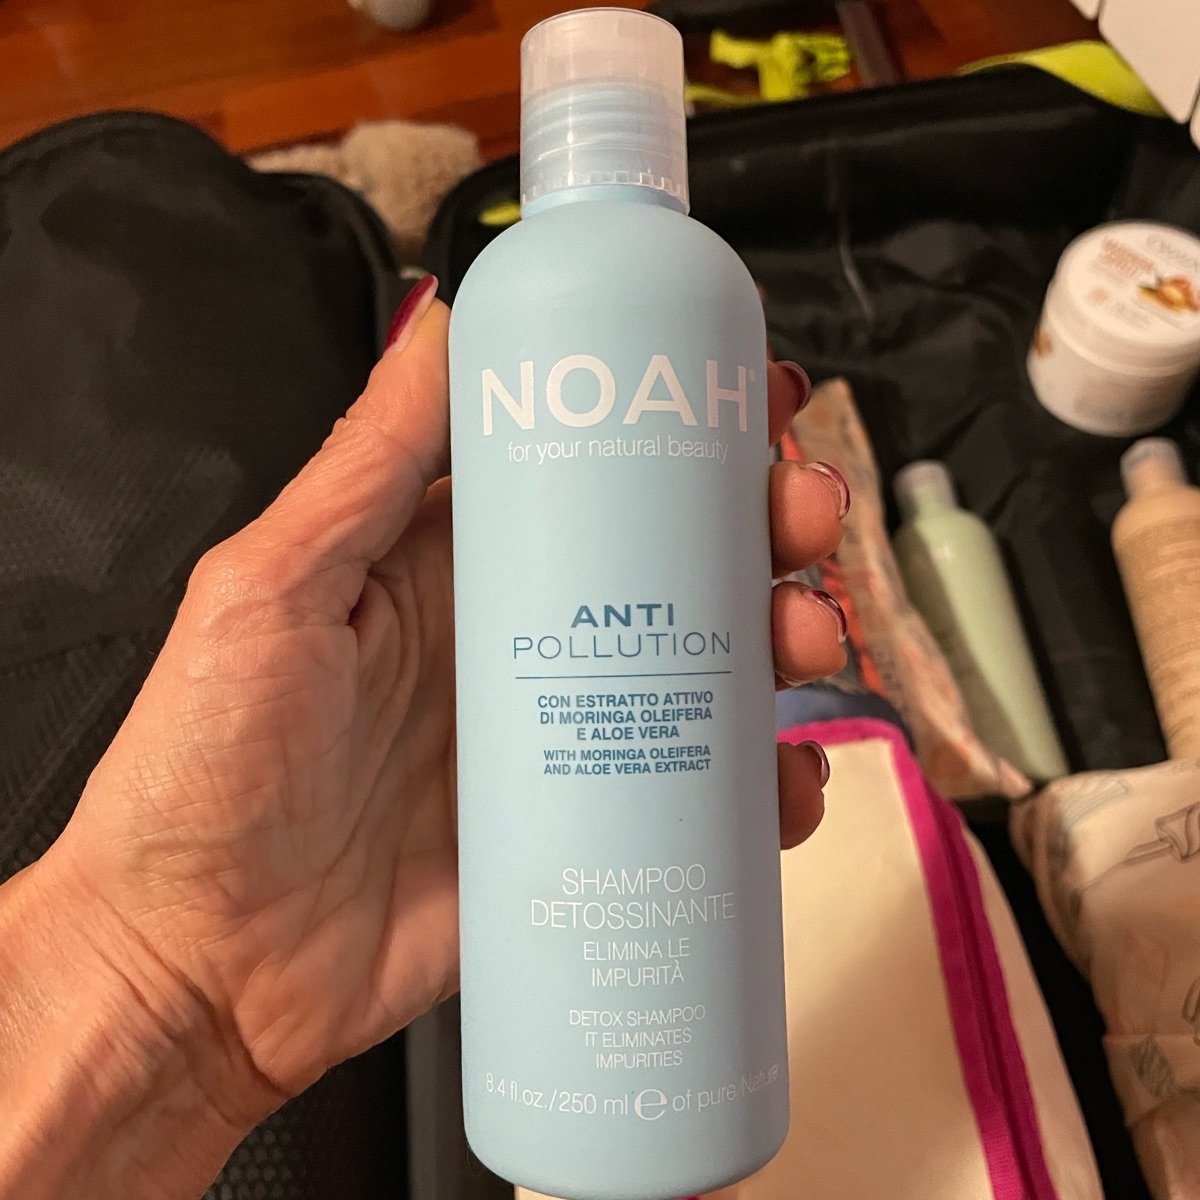 NOAH Anti pollution shampoo detossinante Reviews | abillion